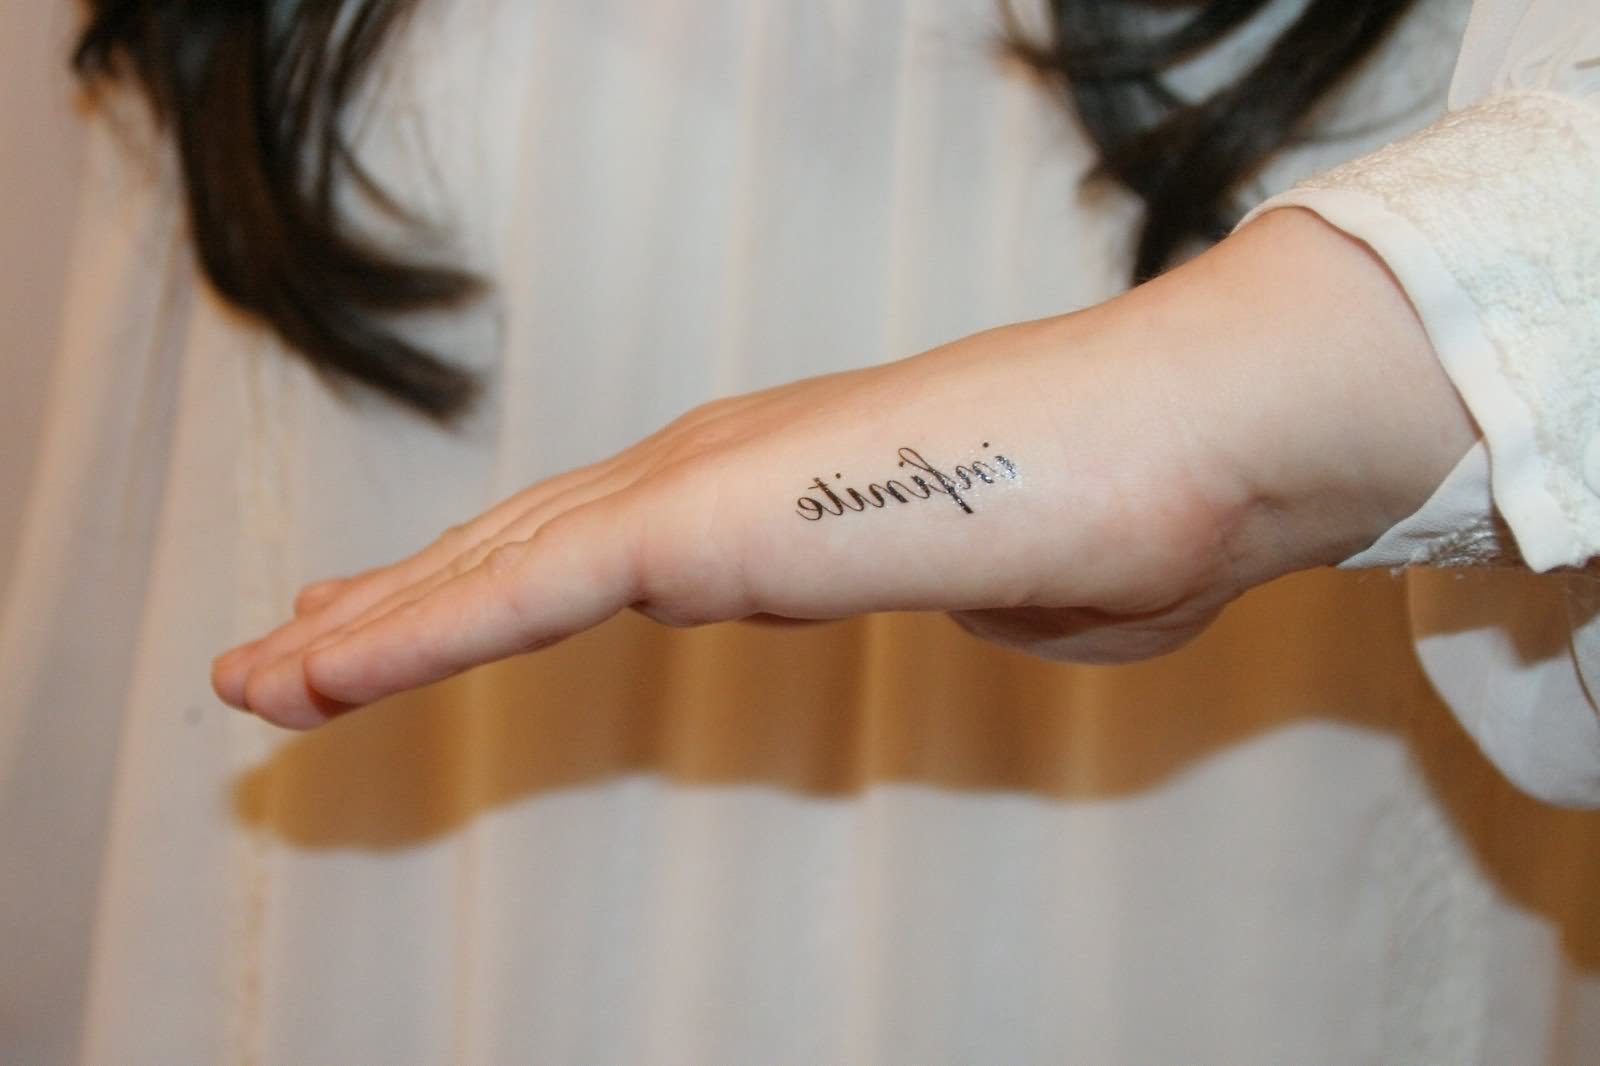 Black name tattoo on left hand